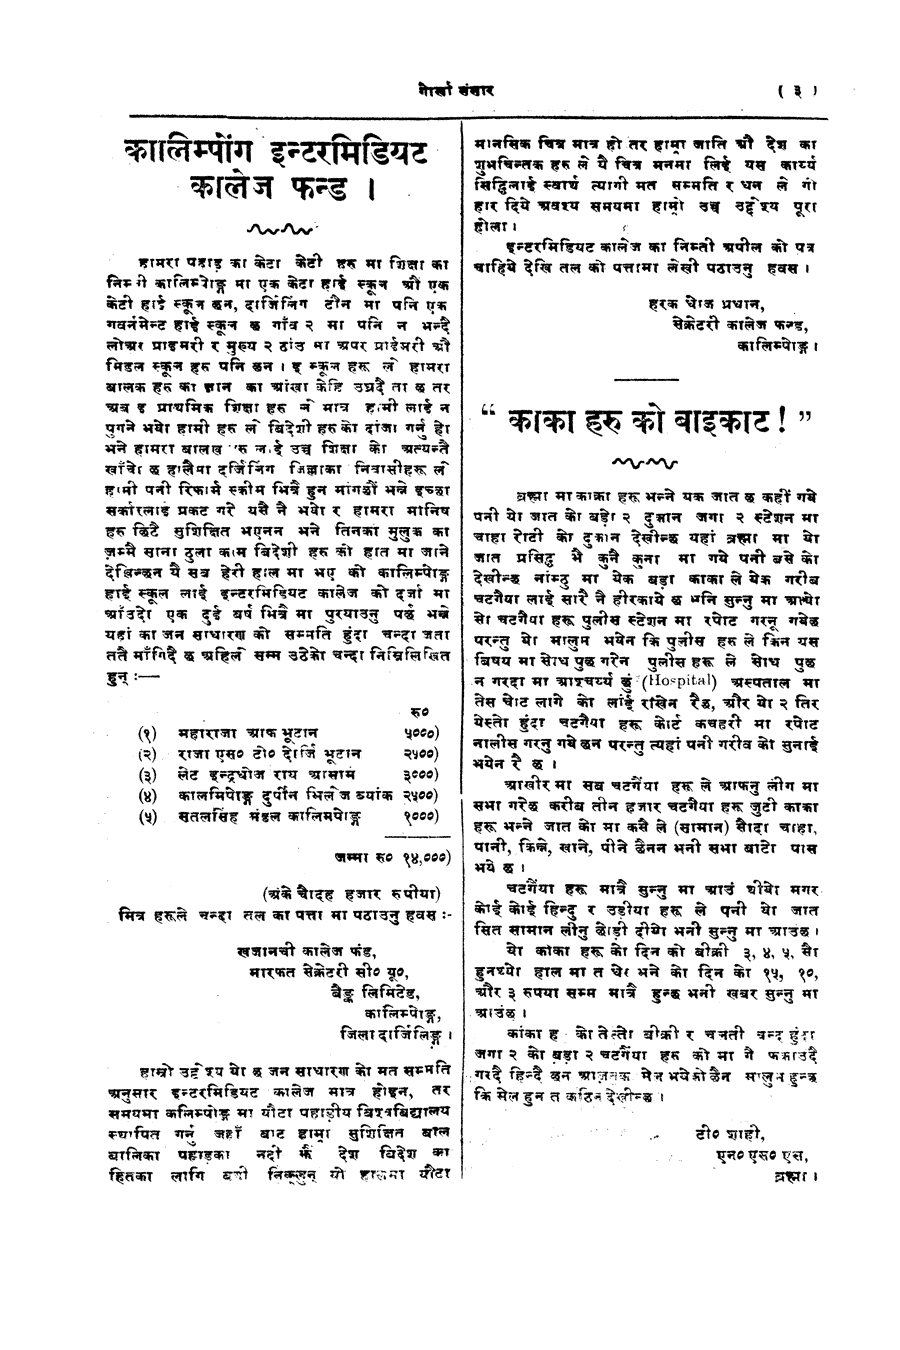 Gorkha Sansar, 8 June 1928, page 3